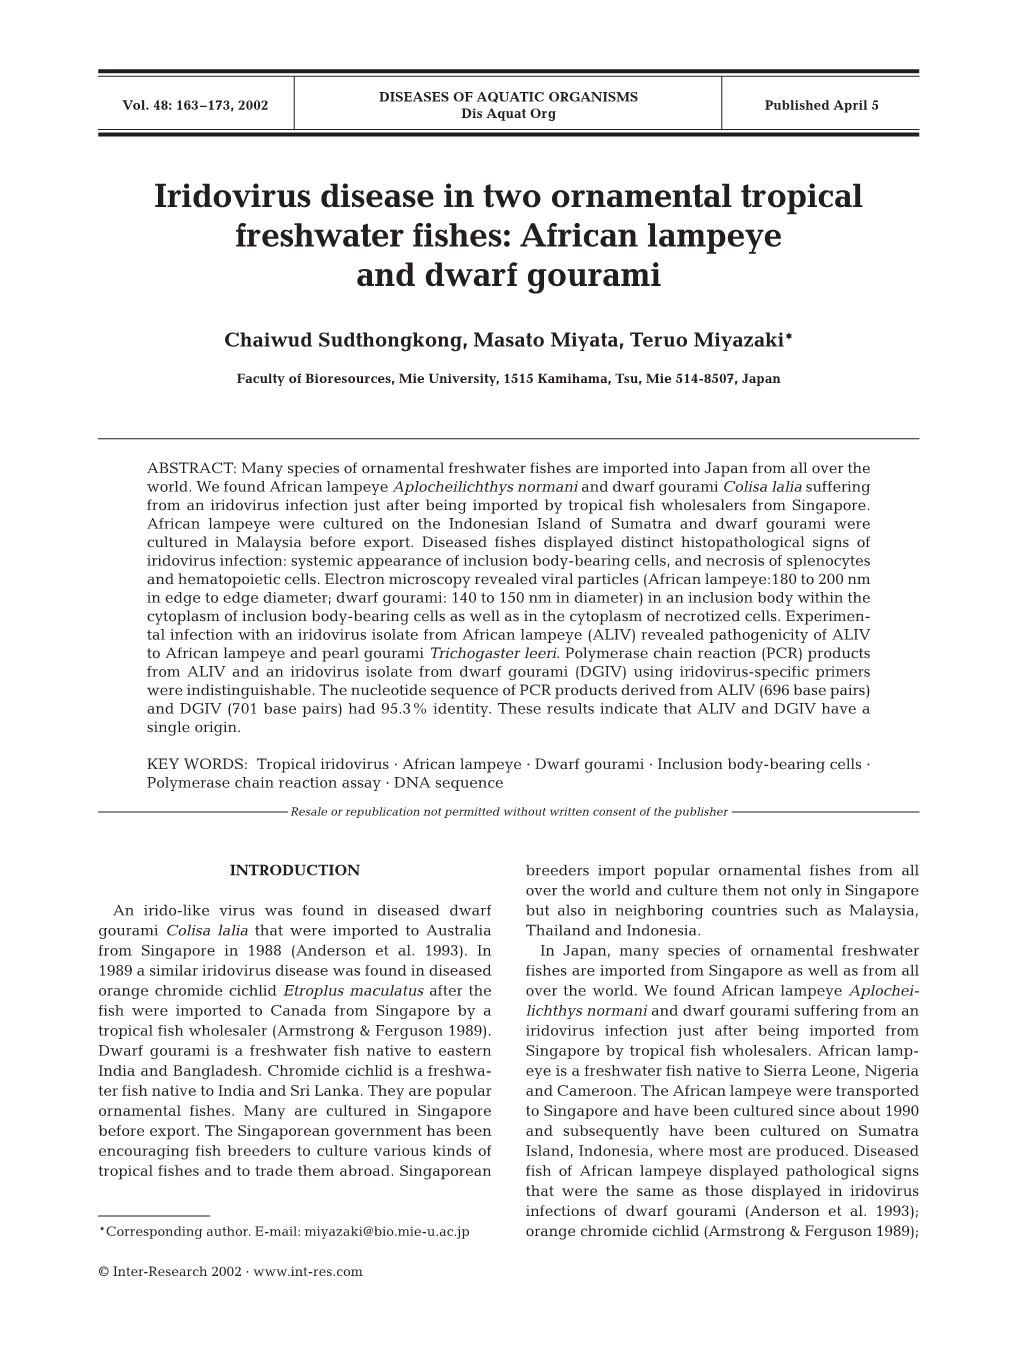 Iridovirus Disease in Two Ornamental Tropical Freshwater Fishes: African Lampeye and Dwarf Gourami